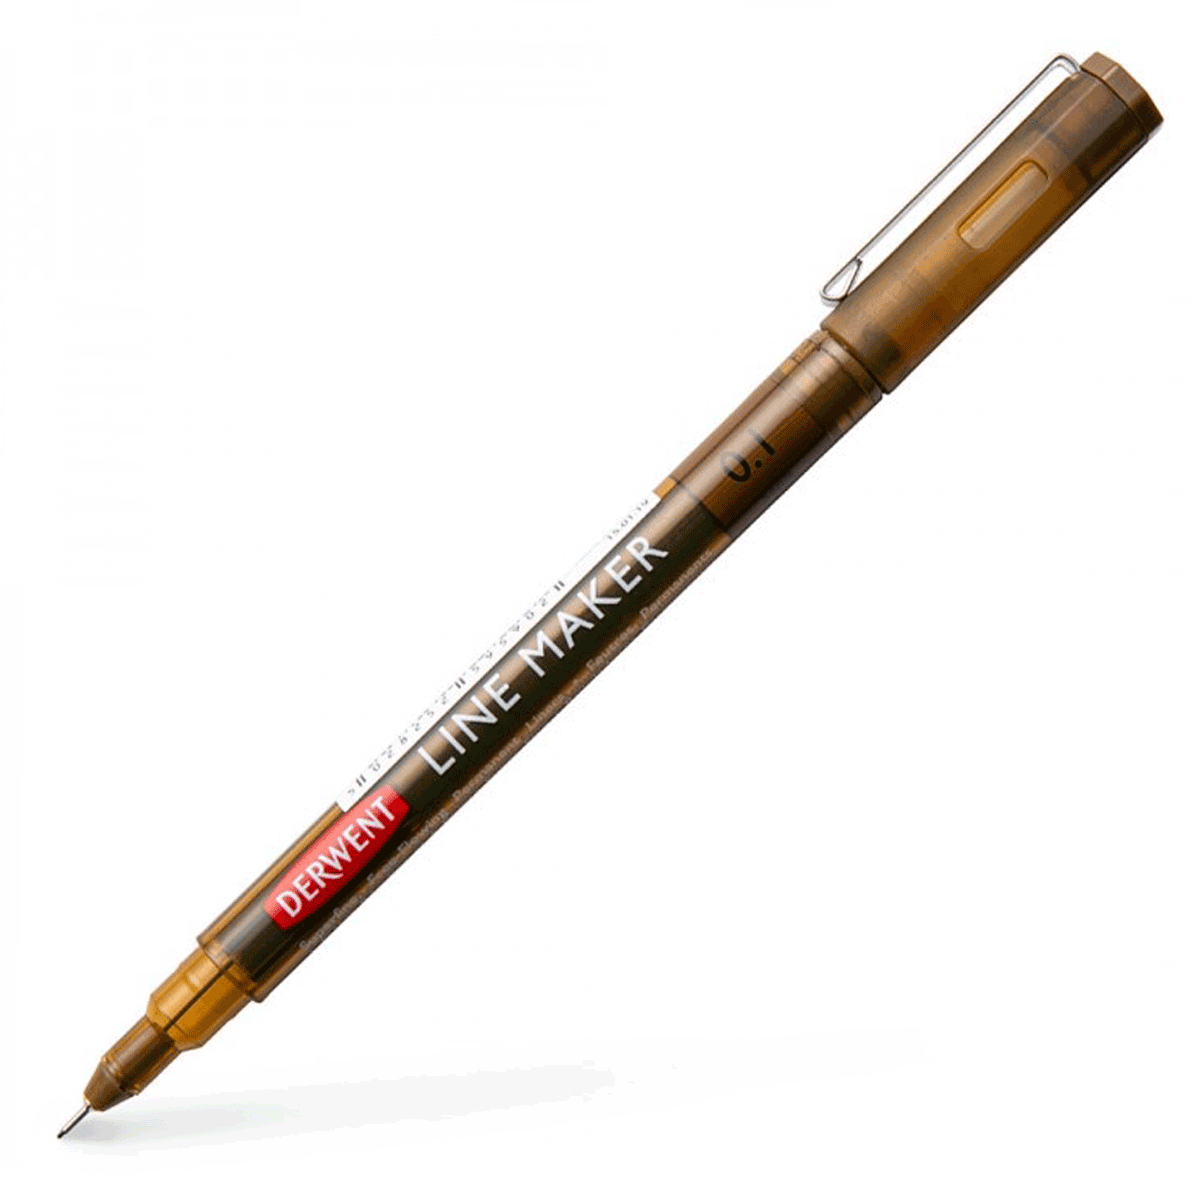 Derwent Graphik Line Maker Pen - Sepia 0.1